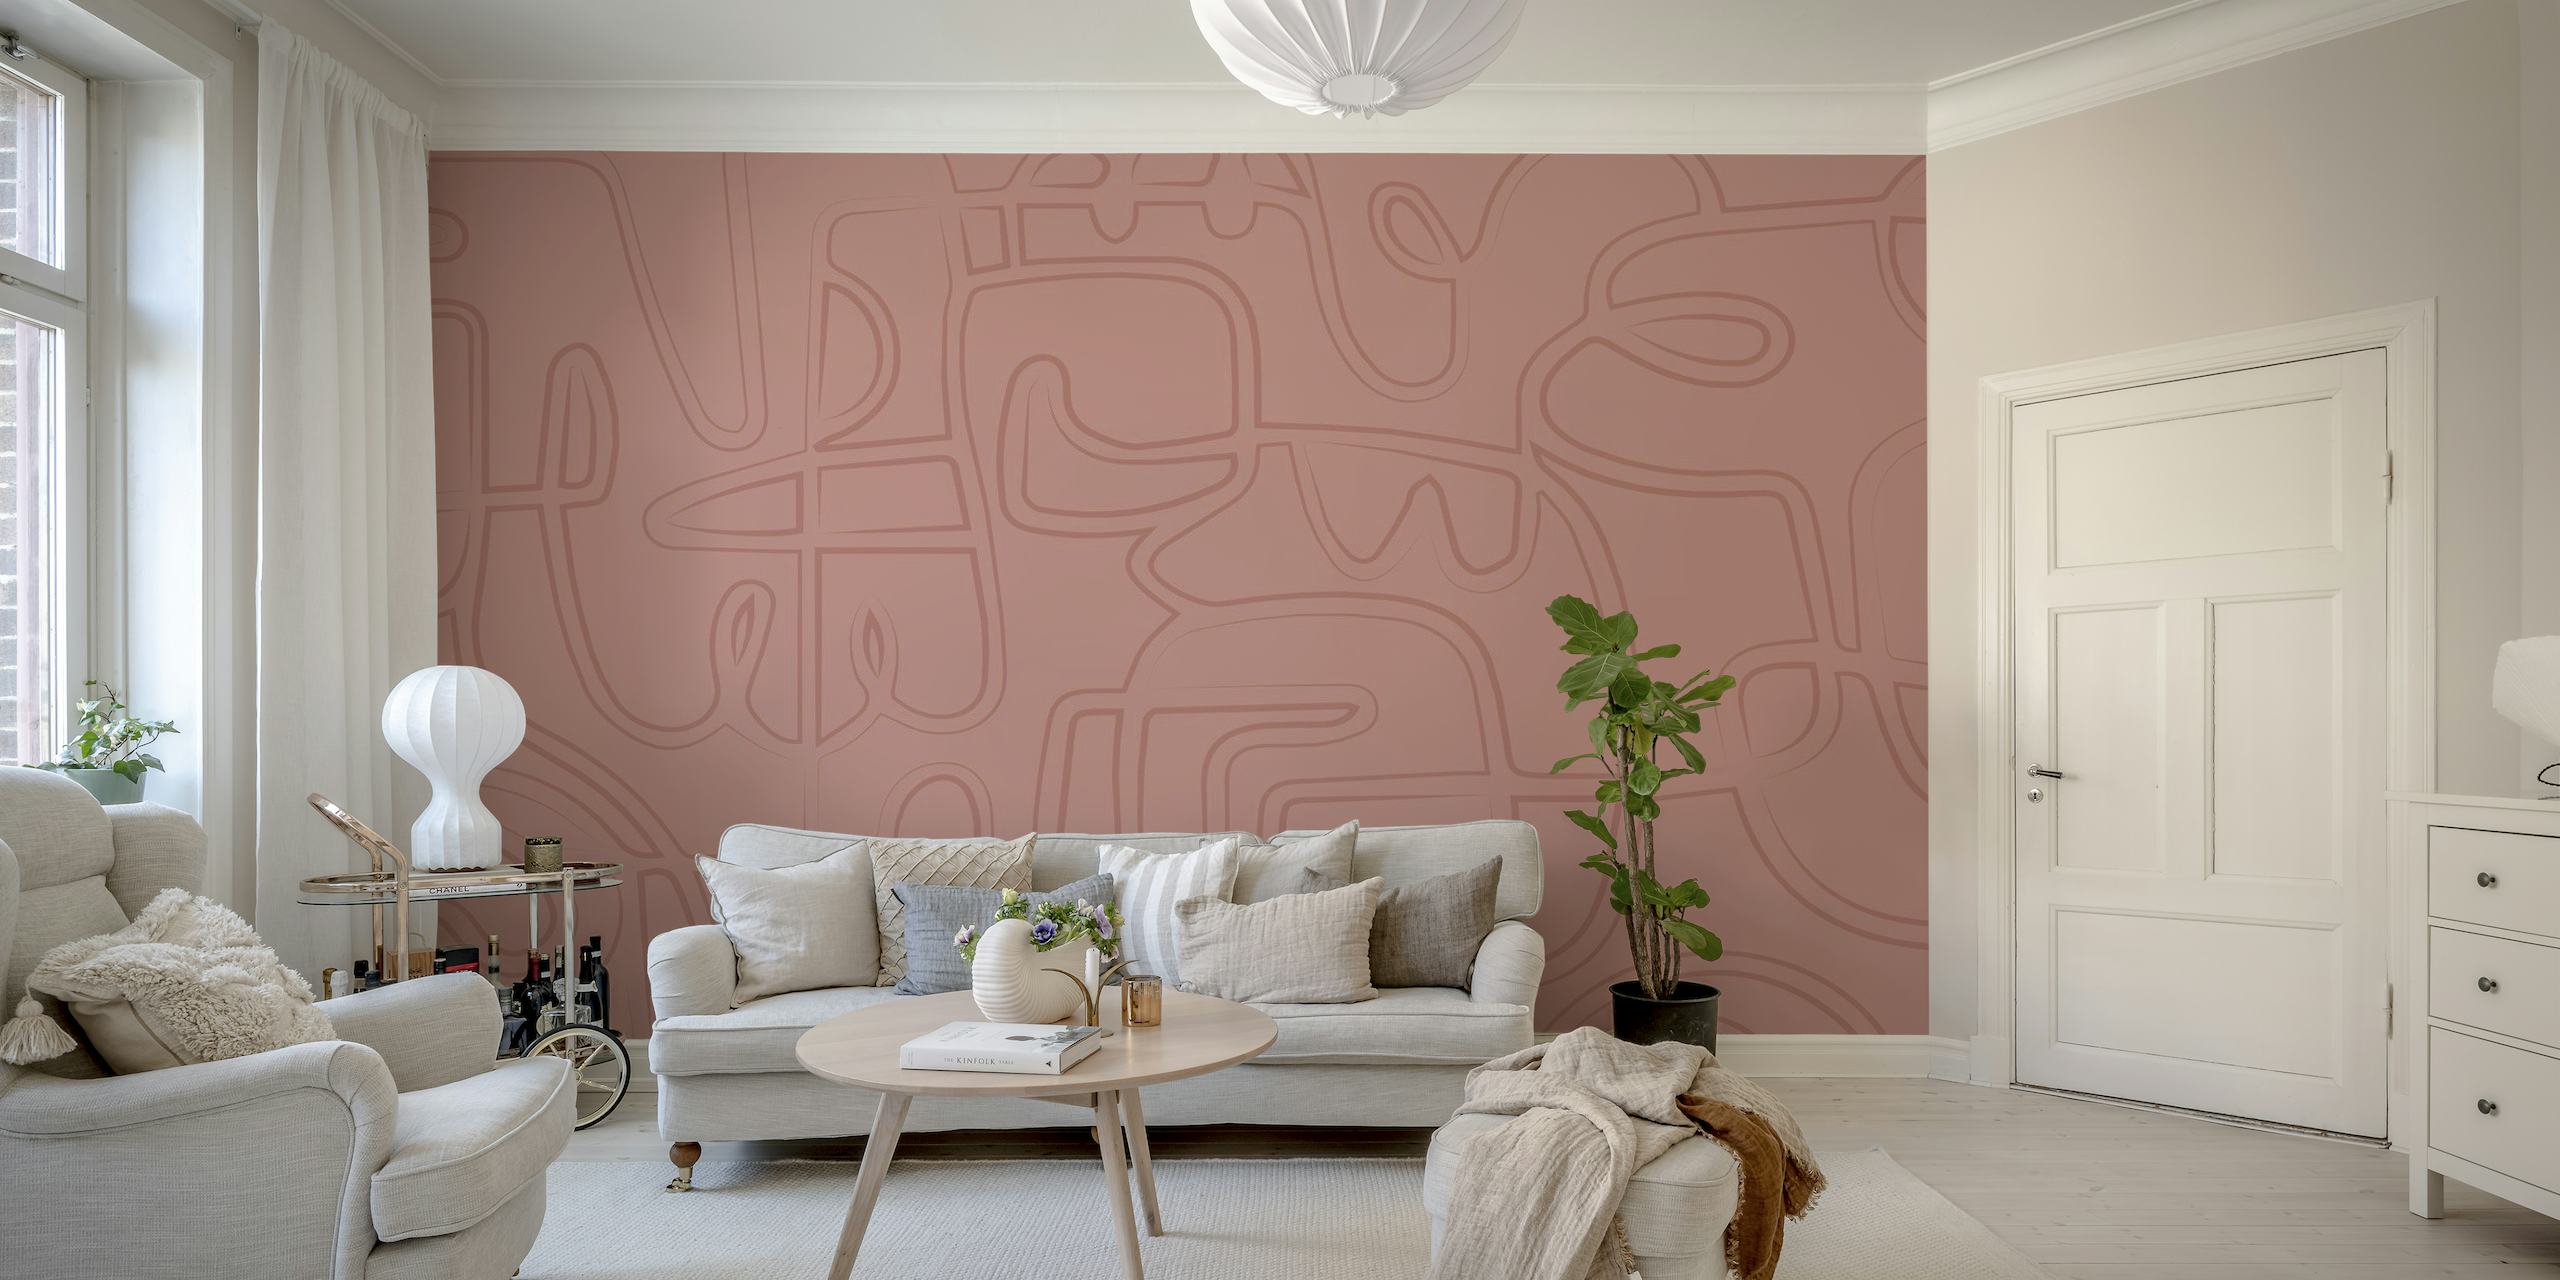 Geometric shapes in rose hues wall mural called Cubisme Rose